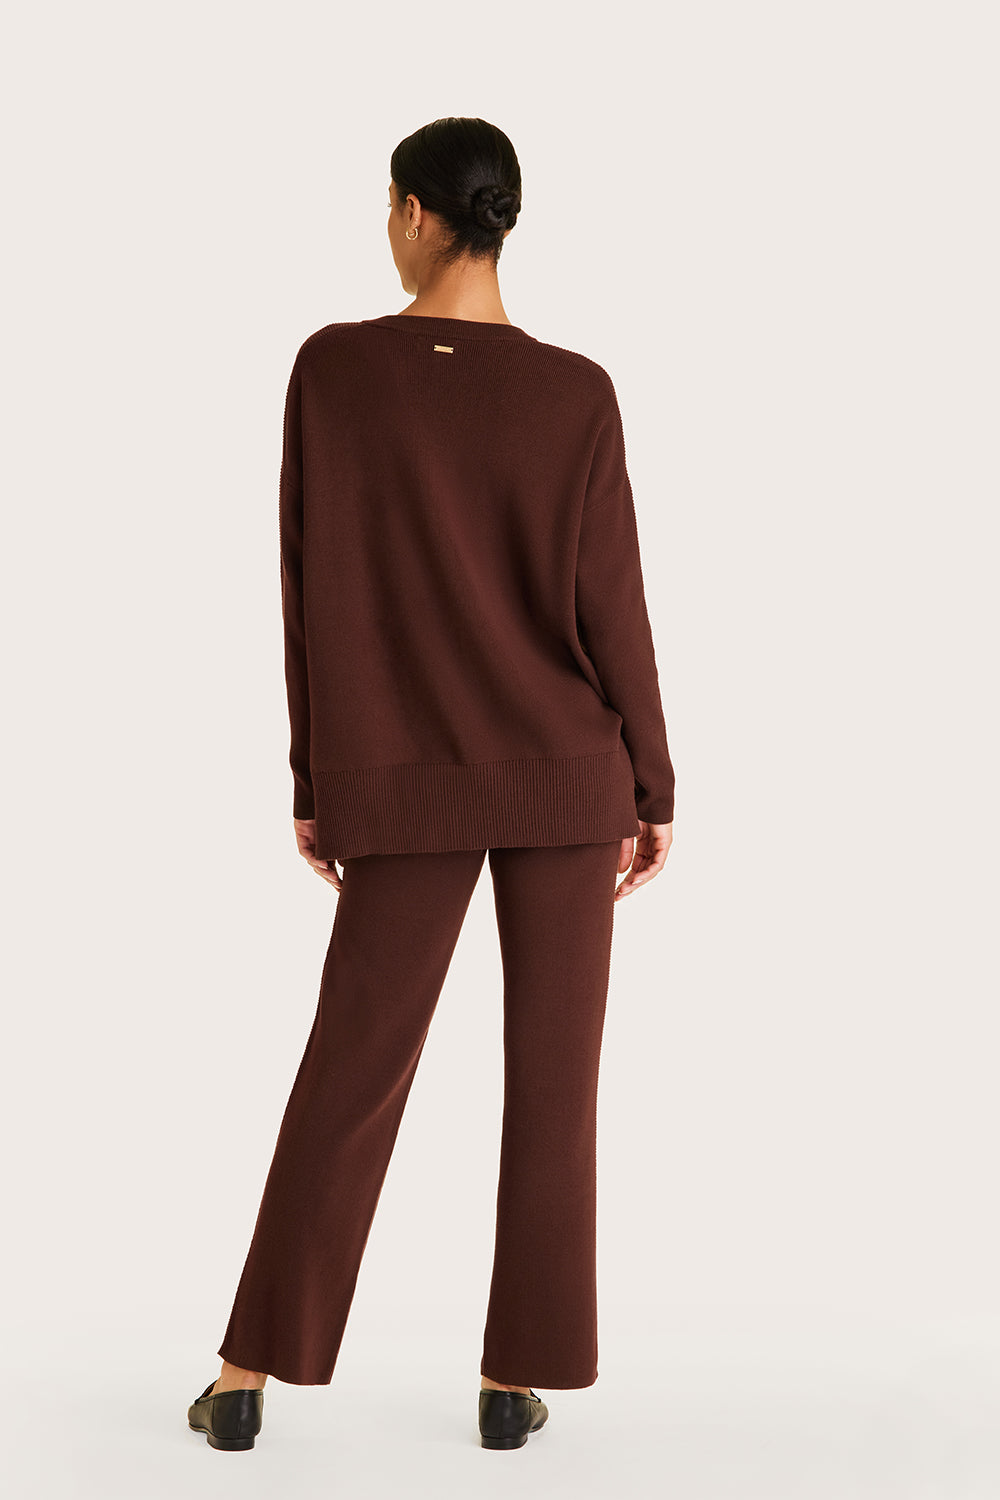 Alala women's knit pant in brown